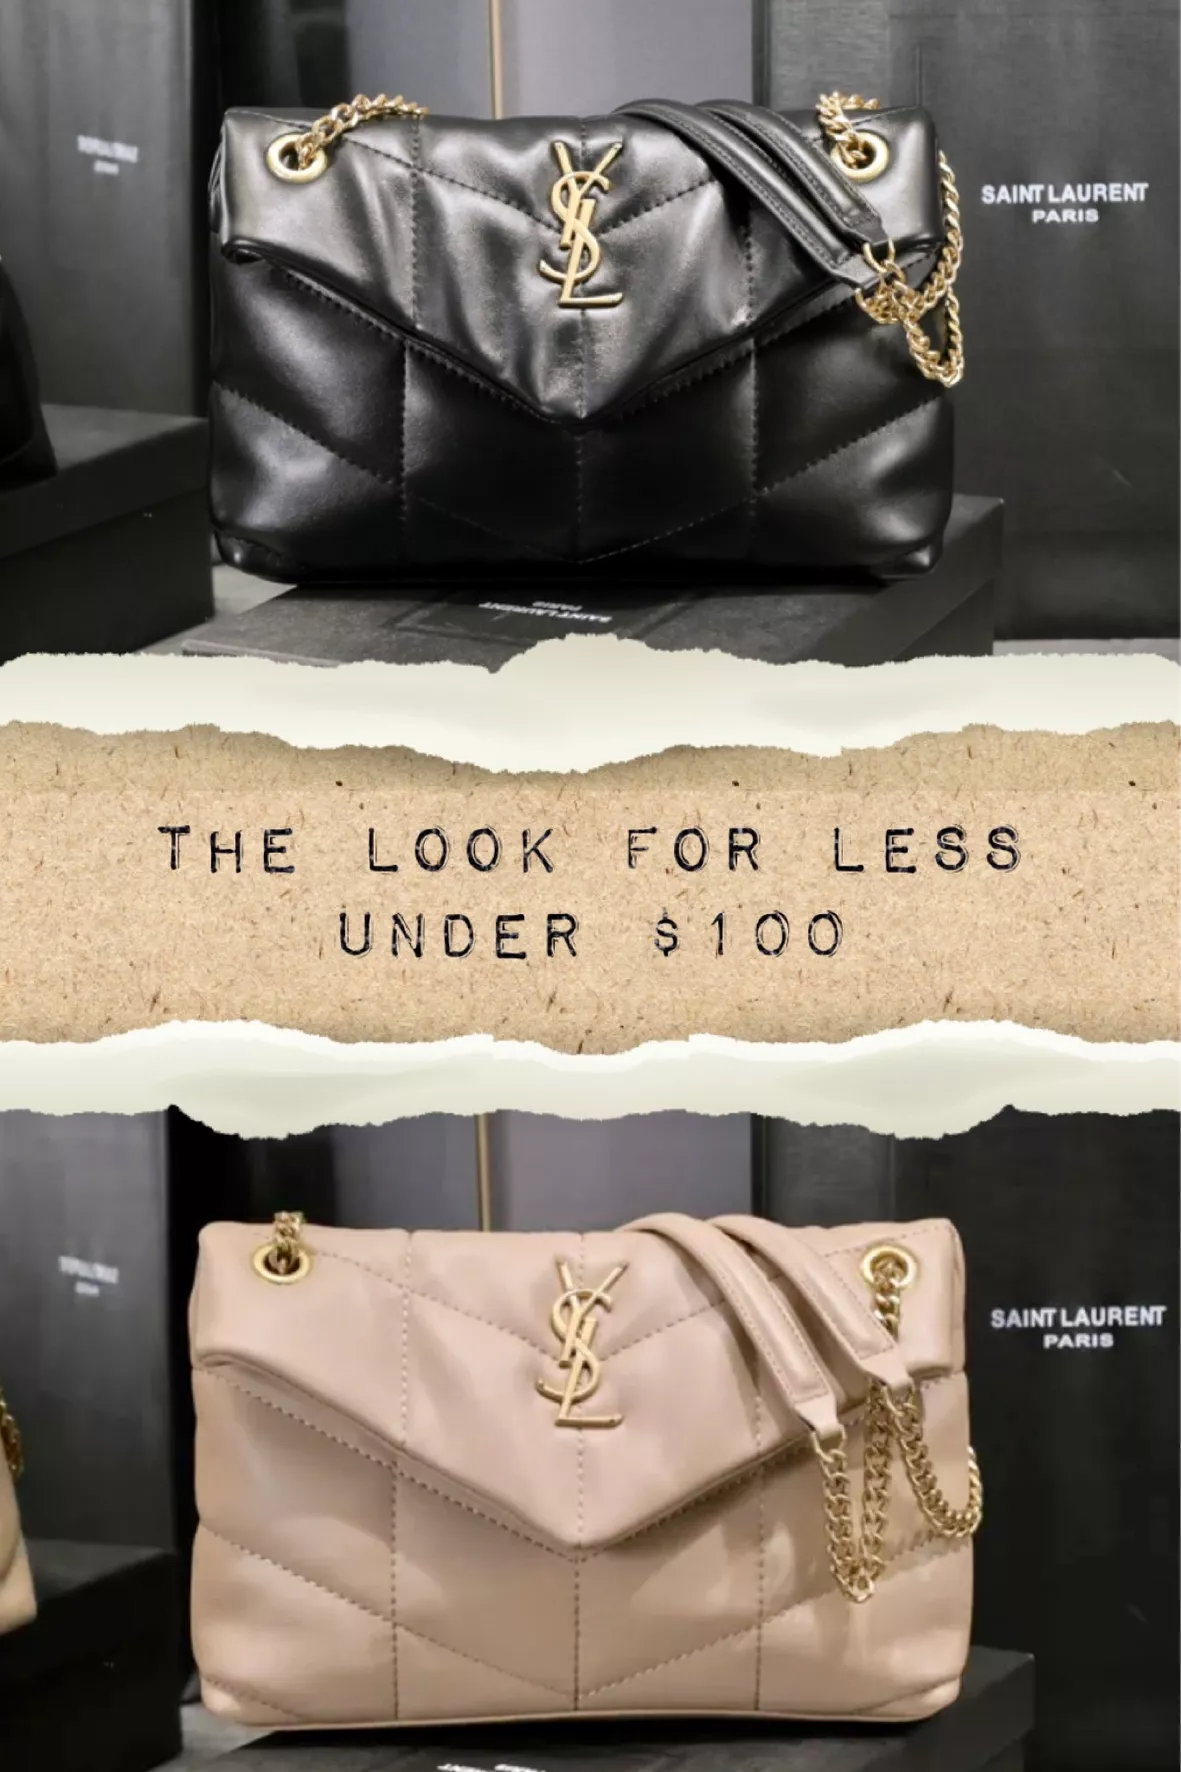 YSL Puffer bag Small - all black : r/DHgate